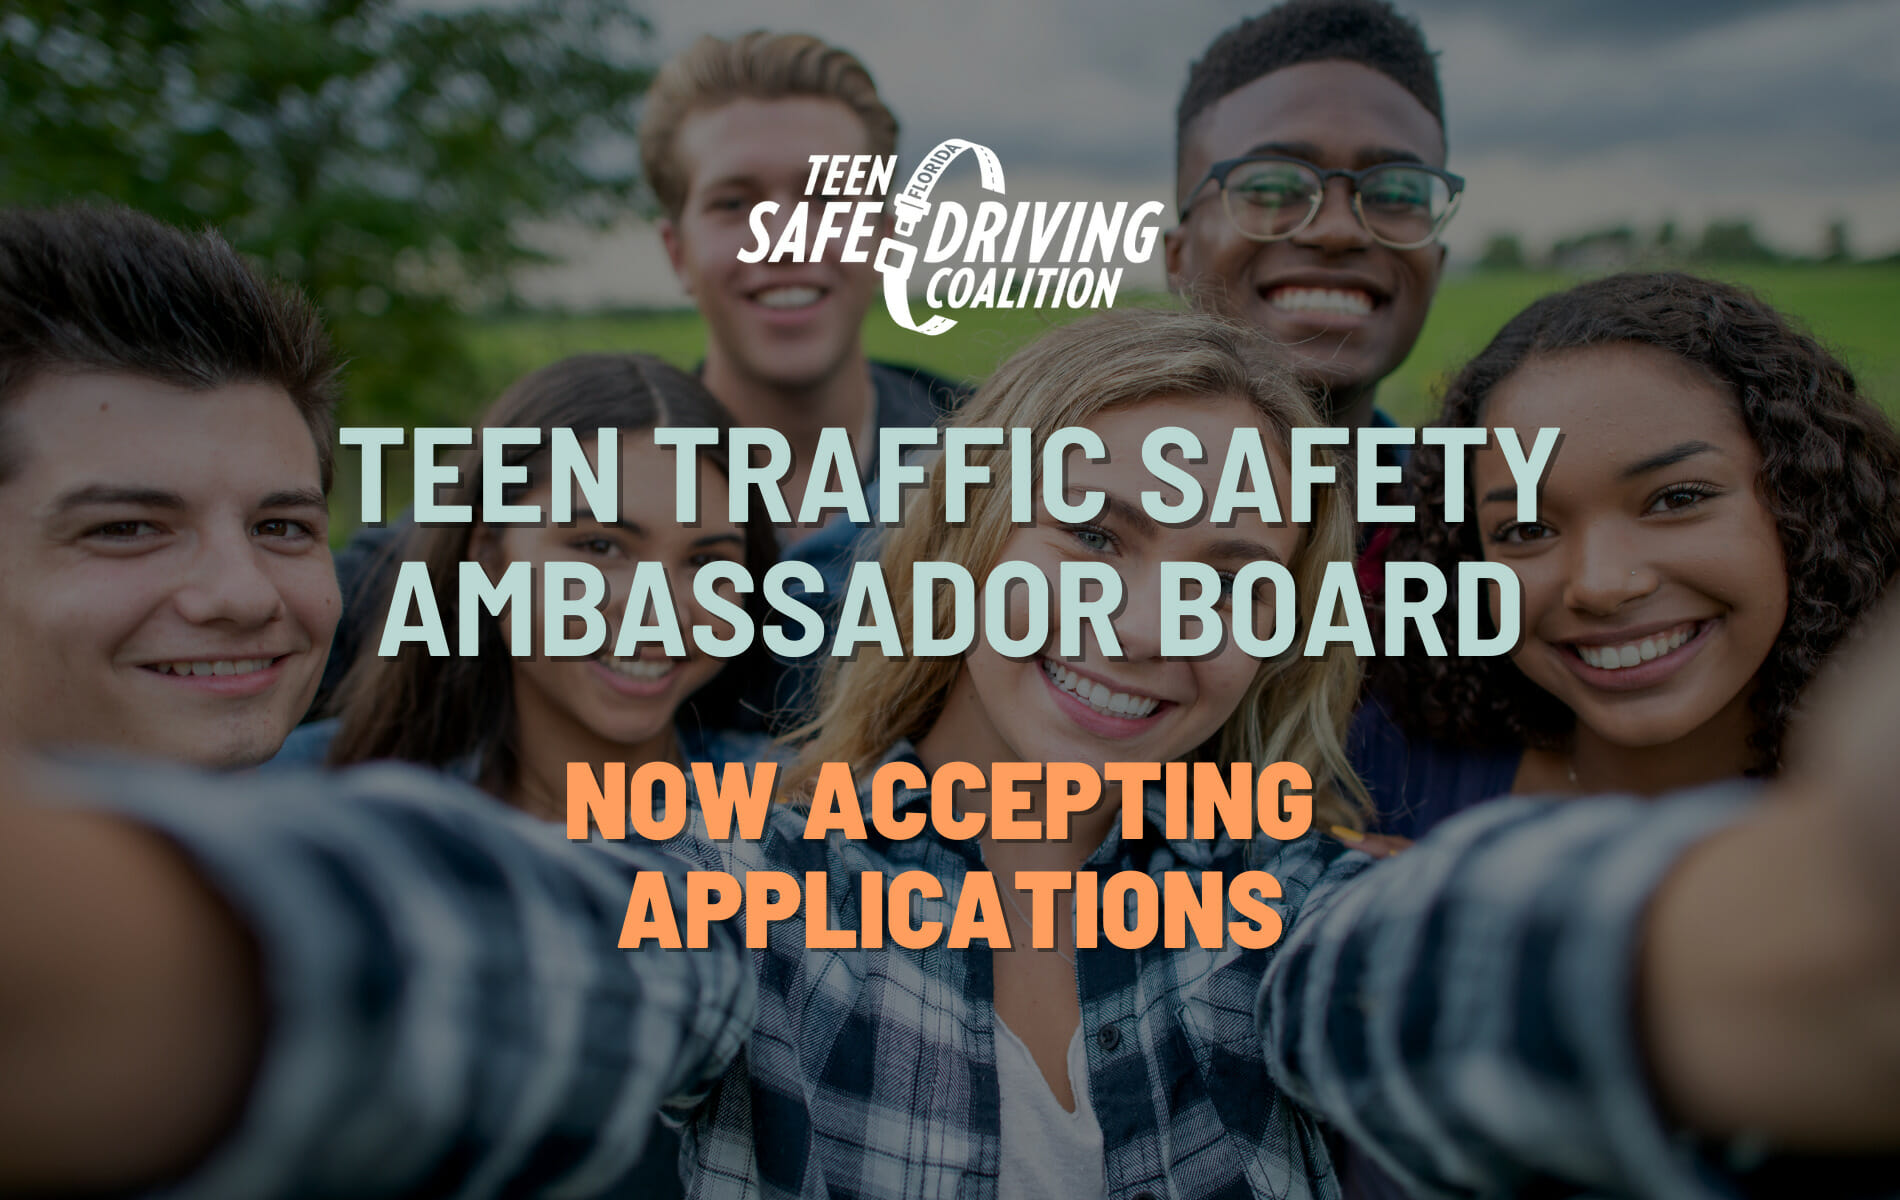 Teen Safe Driving Ambassador Board Program is Accepting Applications